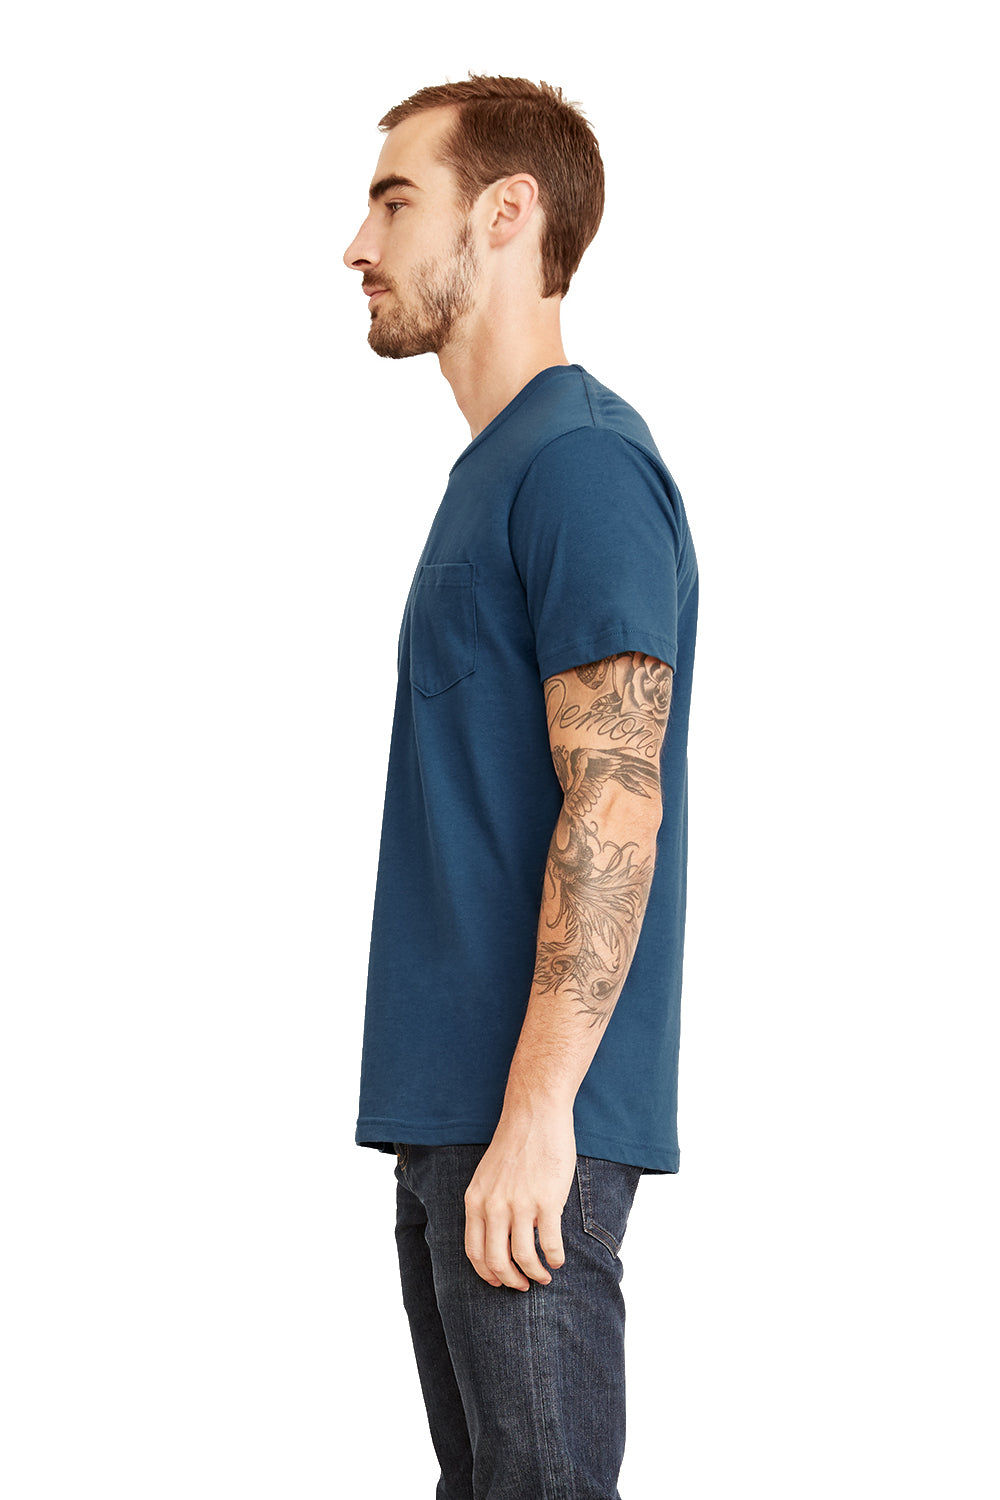 Next Level 3605 Mens Fine Jersey Short Sleeve Crewneck T-Shirt w/ Pocket Cool Blue Side